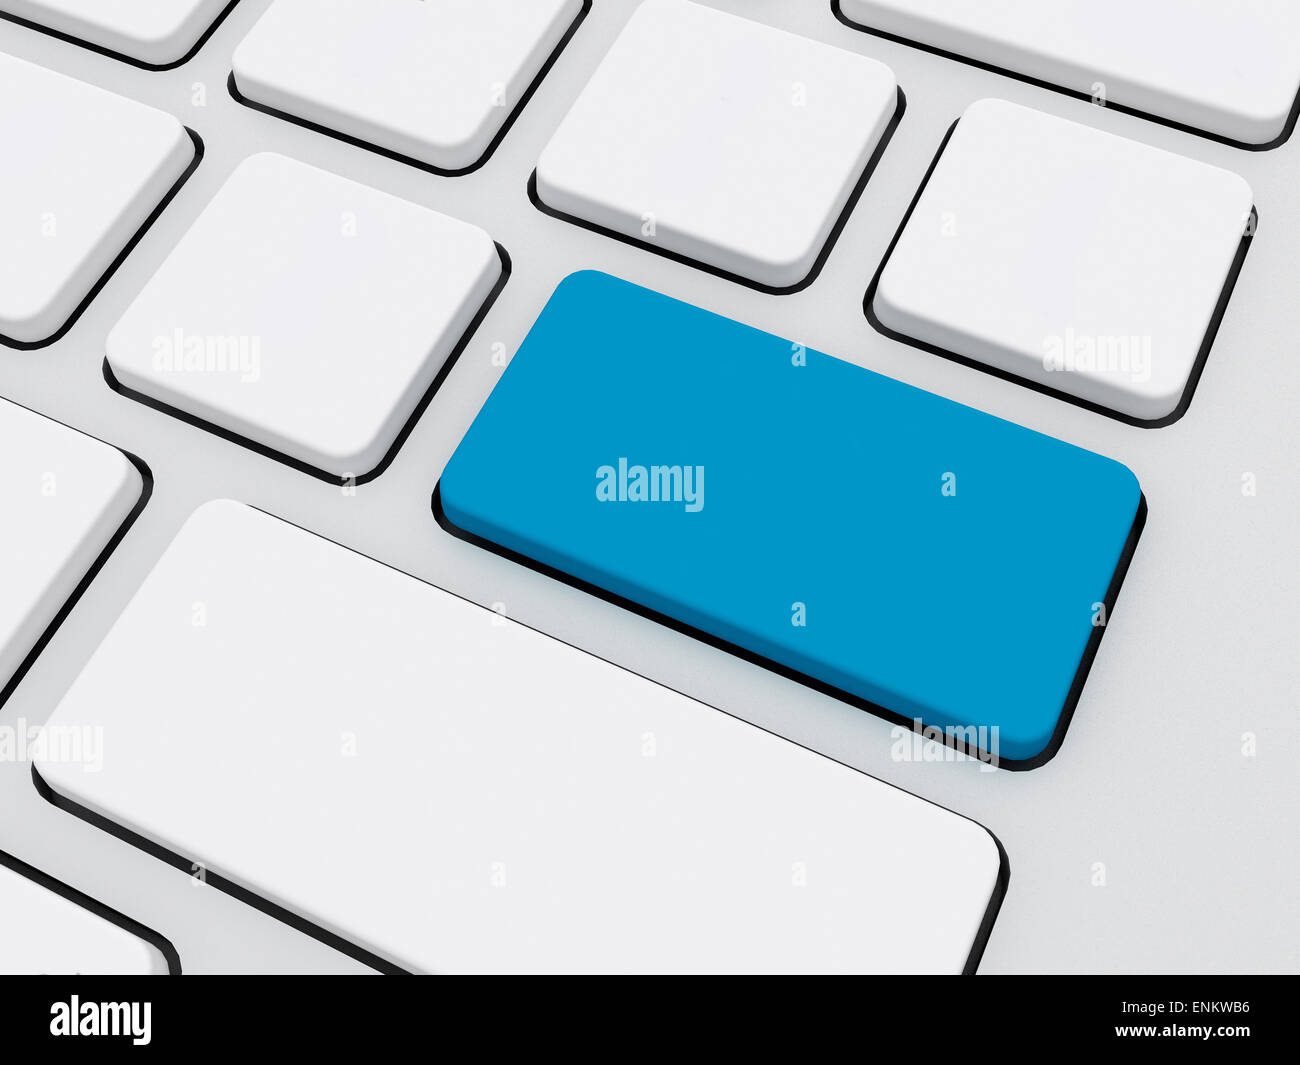 blank blu color key on keyboard, technology concept Stock Photo